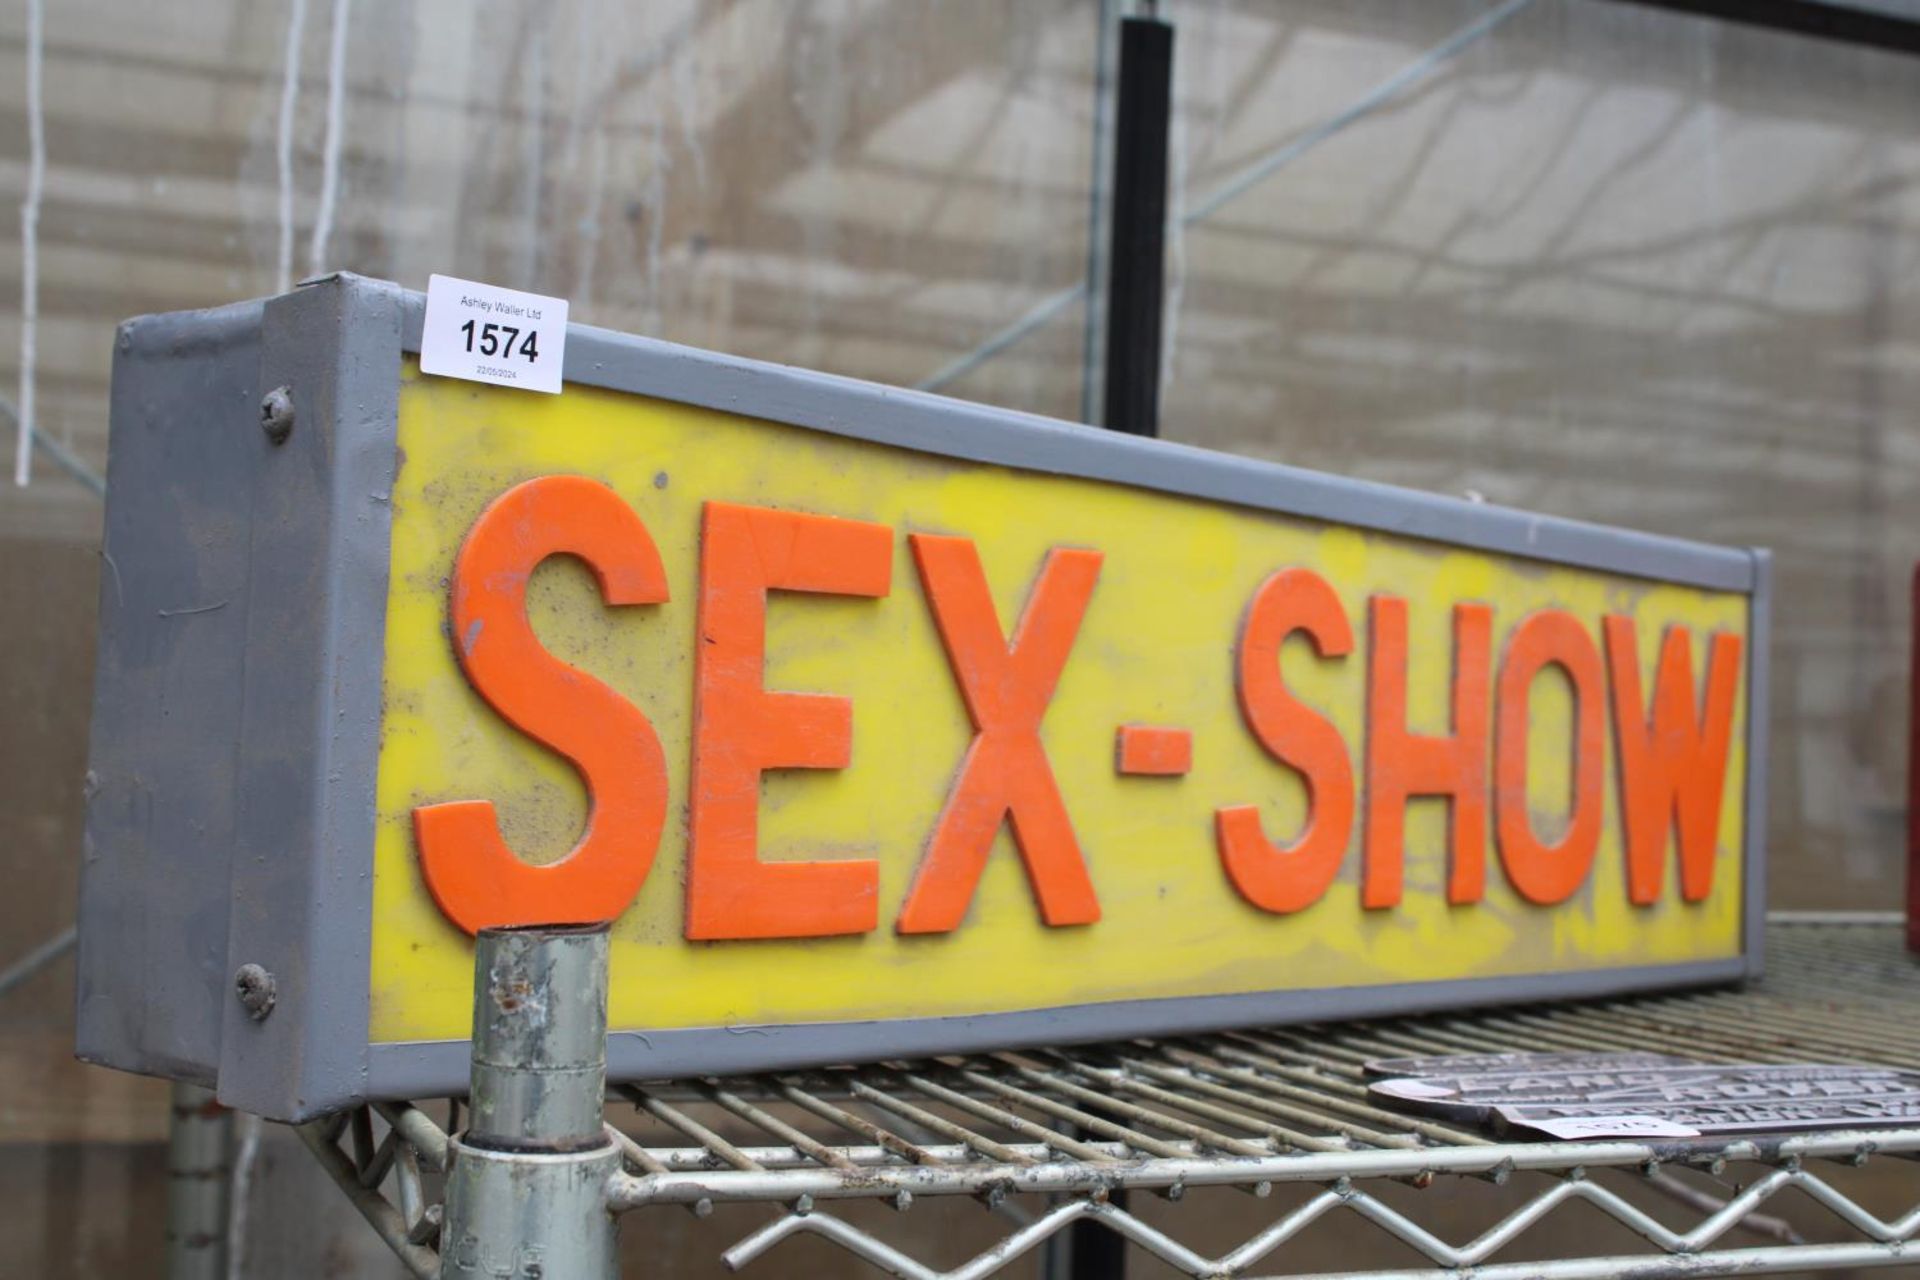 AN ILLUMINATED SEX SHOW SIGN